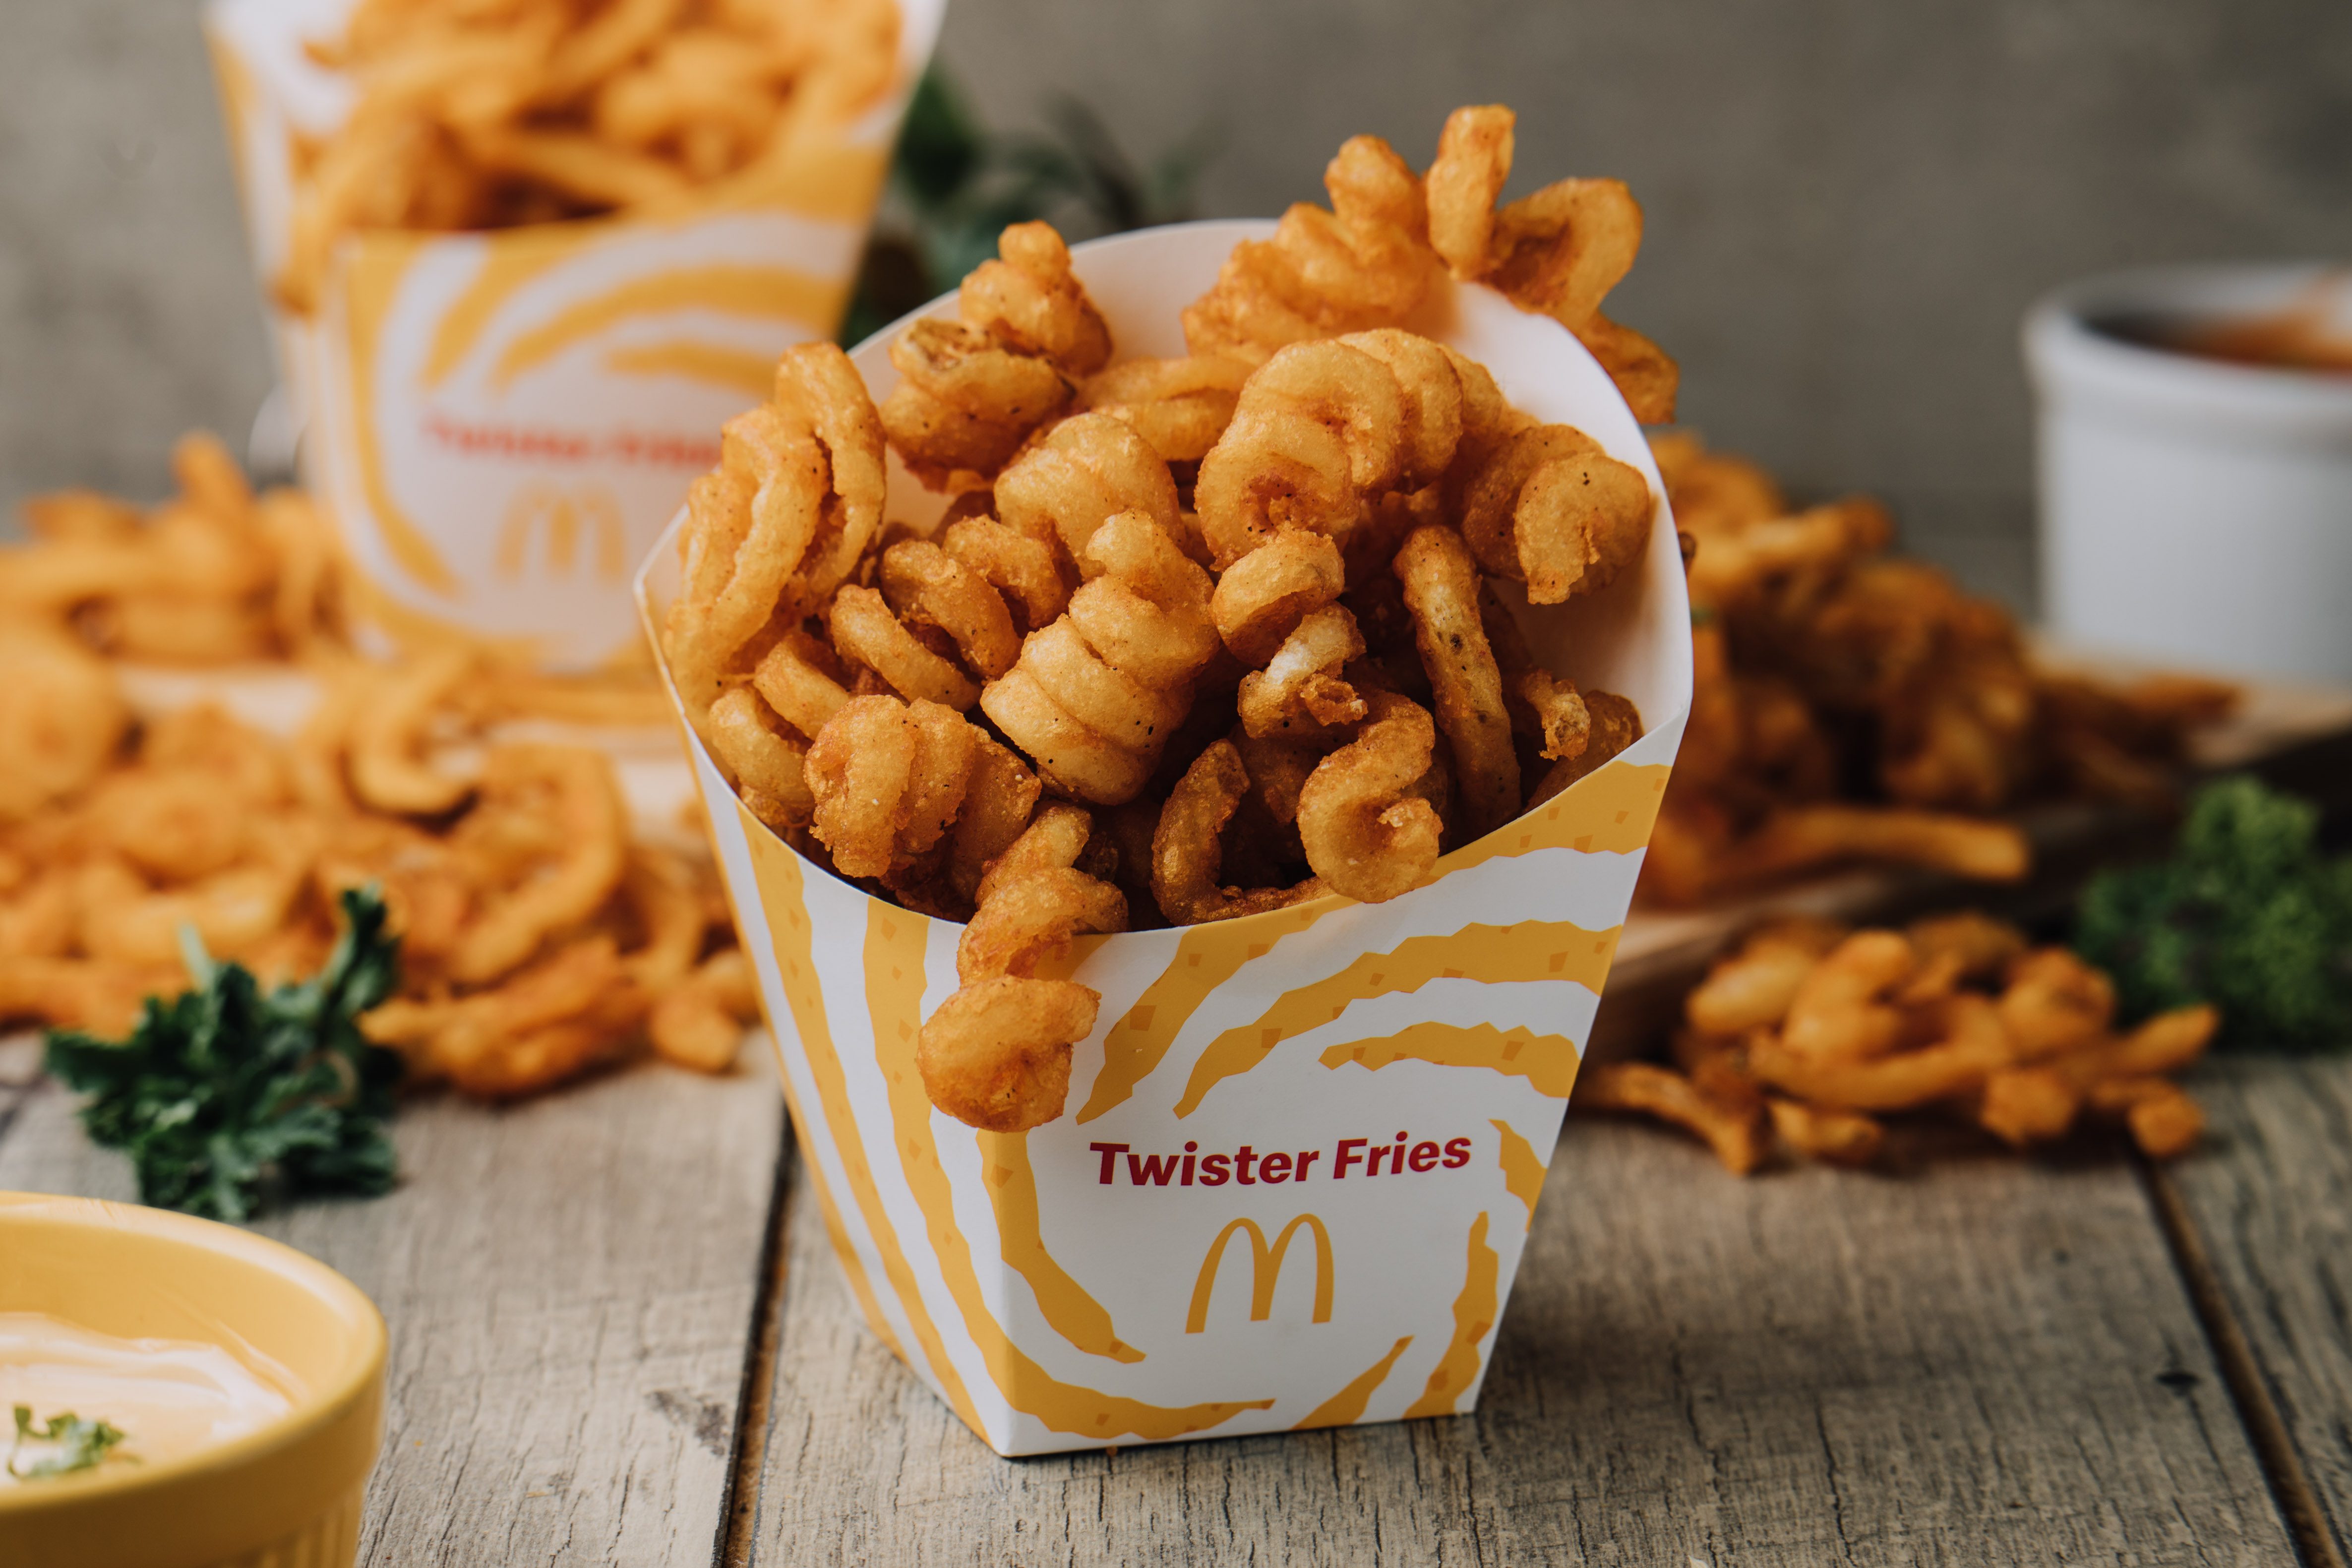 McDonald’s brings back Twister Fries to menu